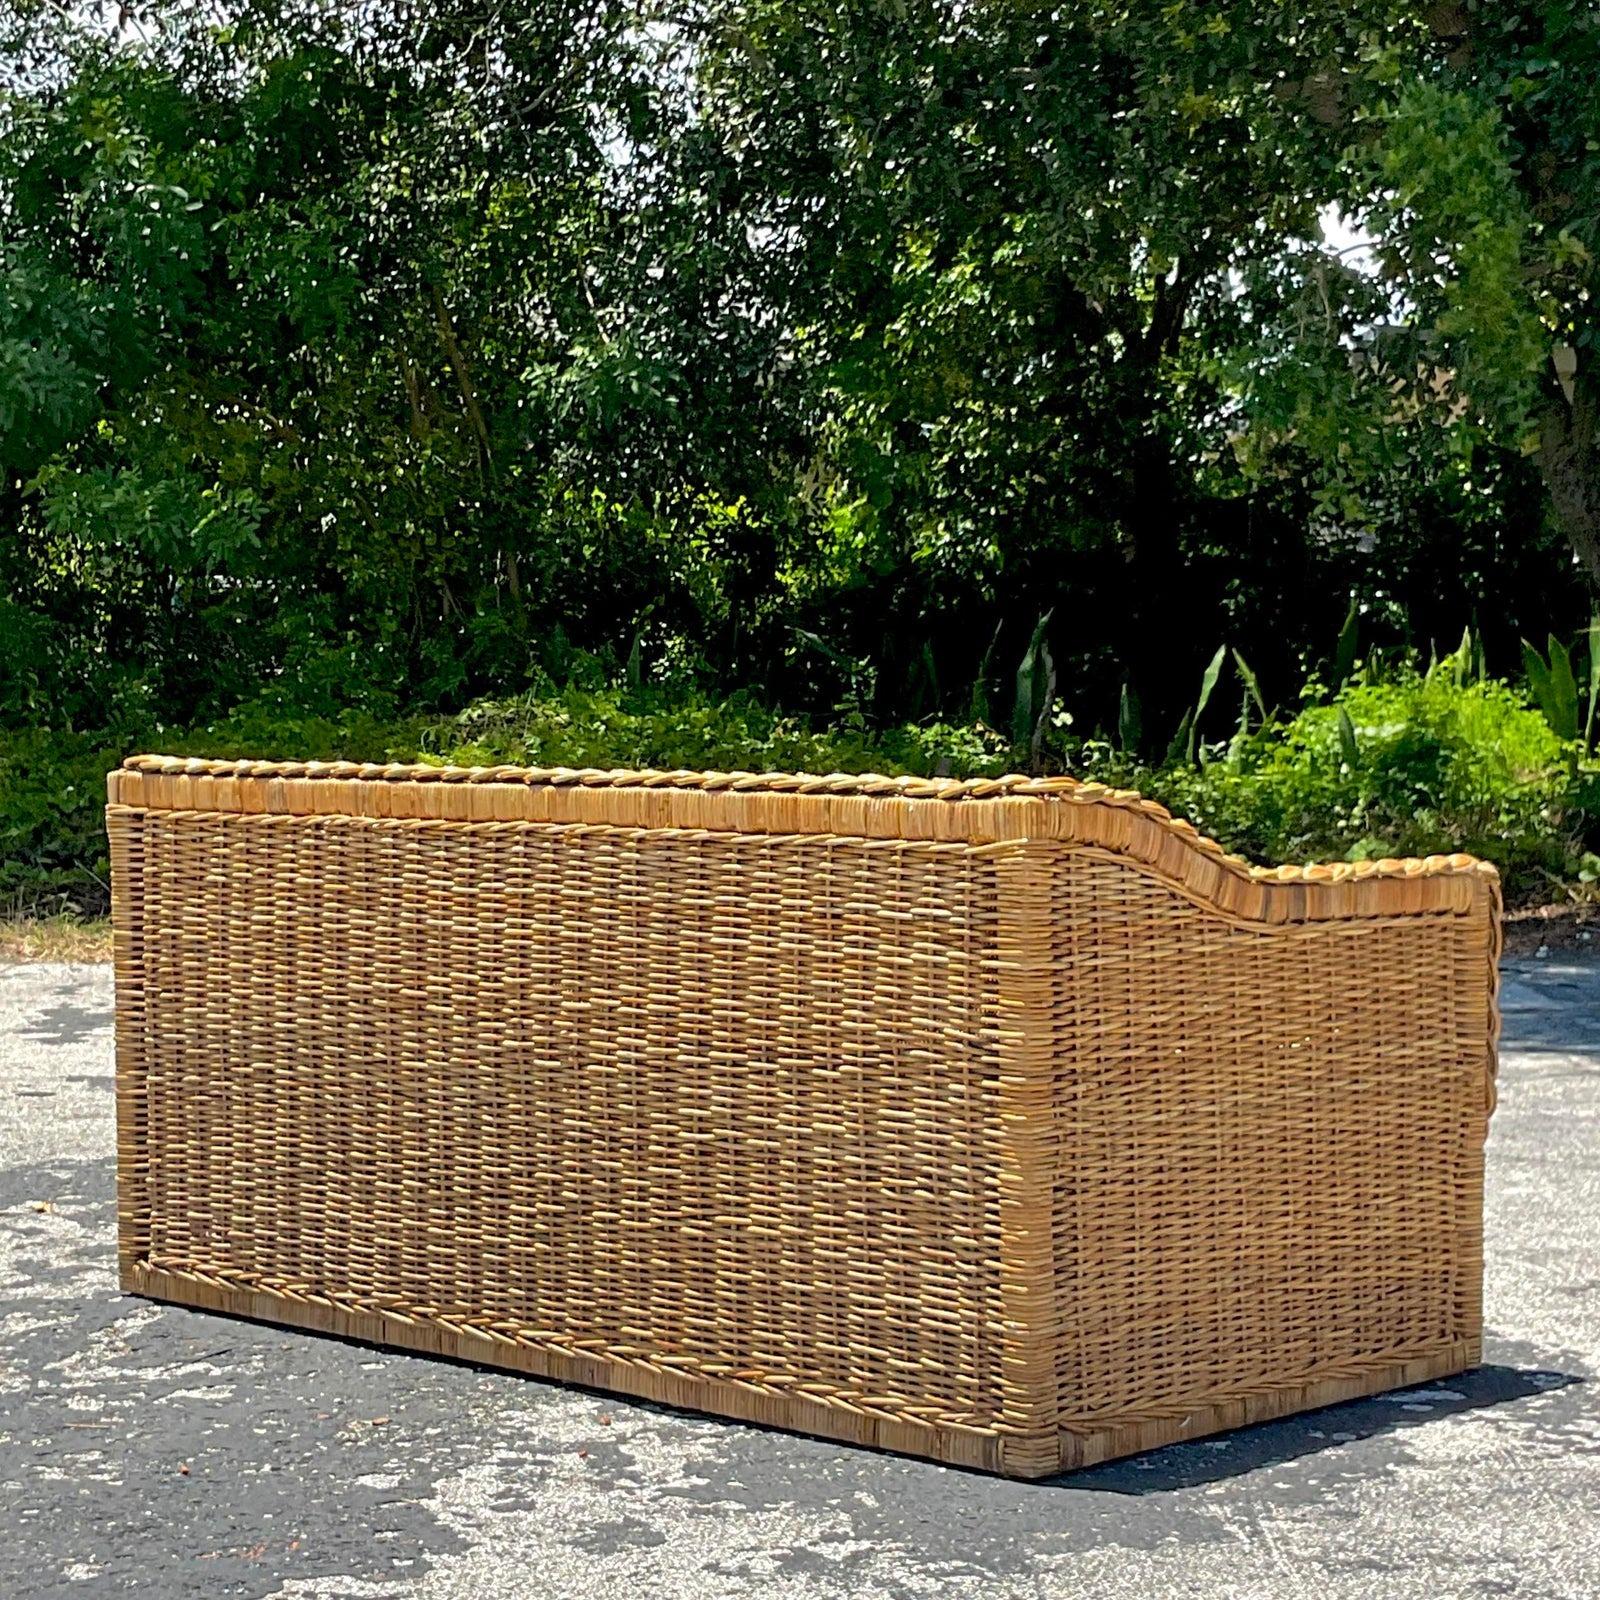 A fabulous vintage Coastal rattan sofa. A chic braided rattan along a woven rattan frame. Acquired from a Palm Beach estate.